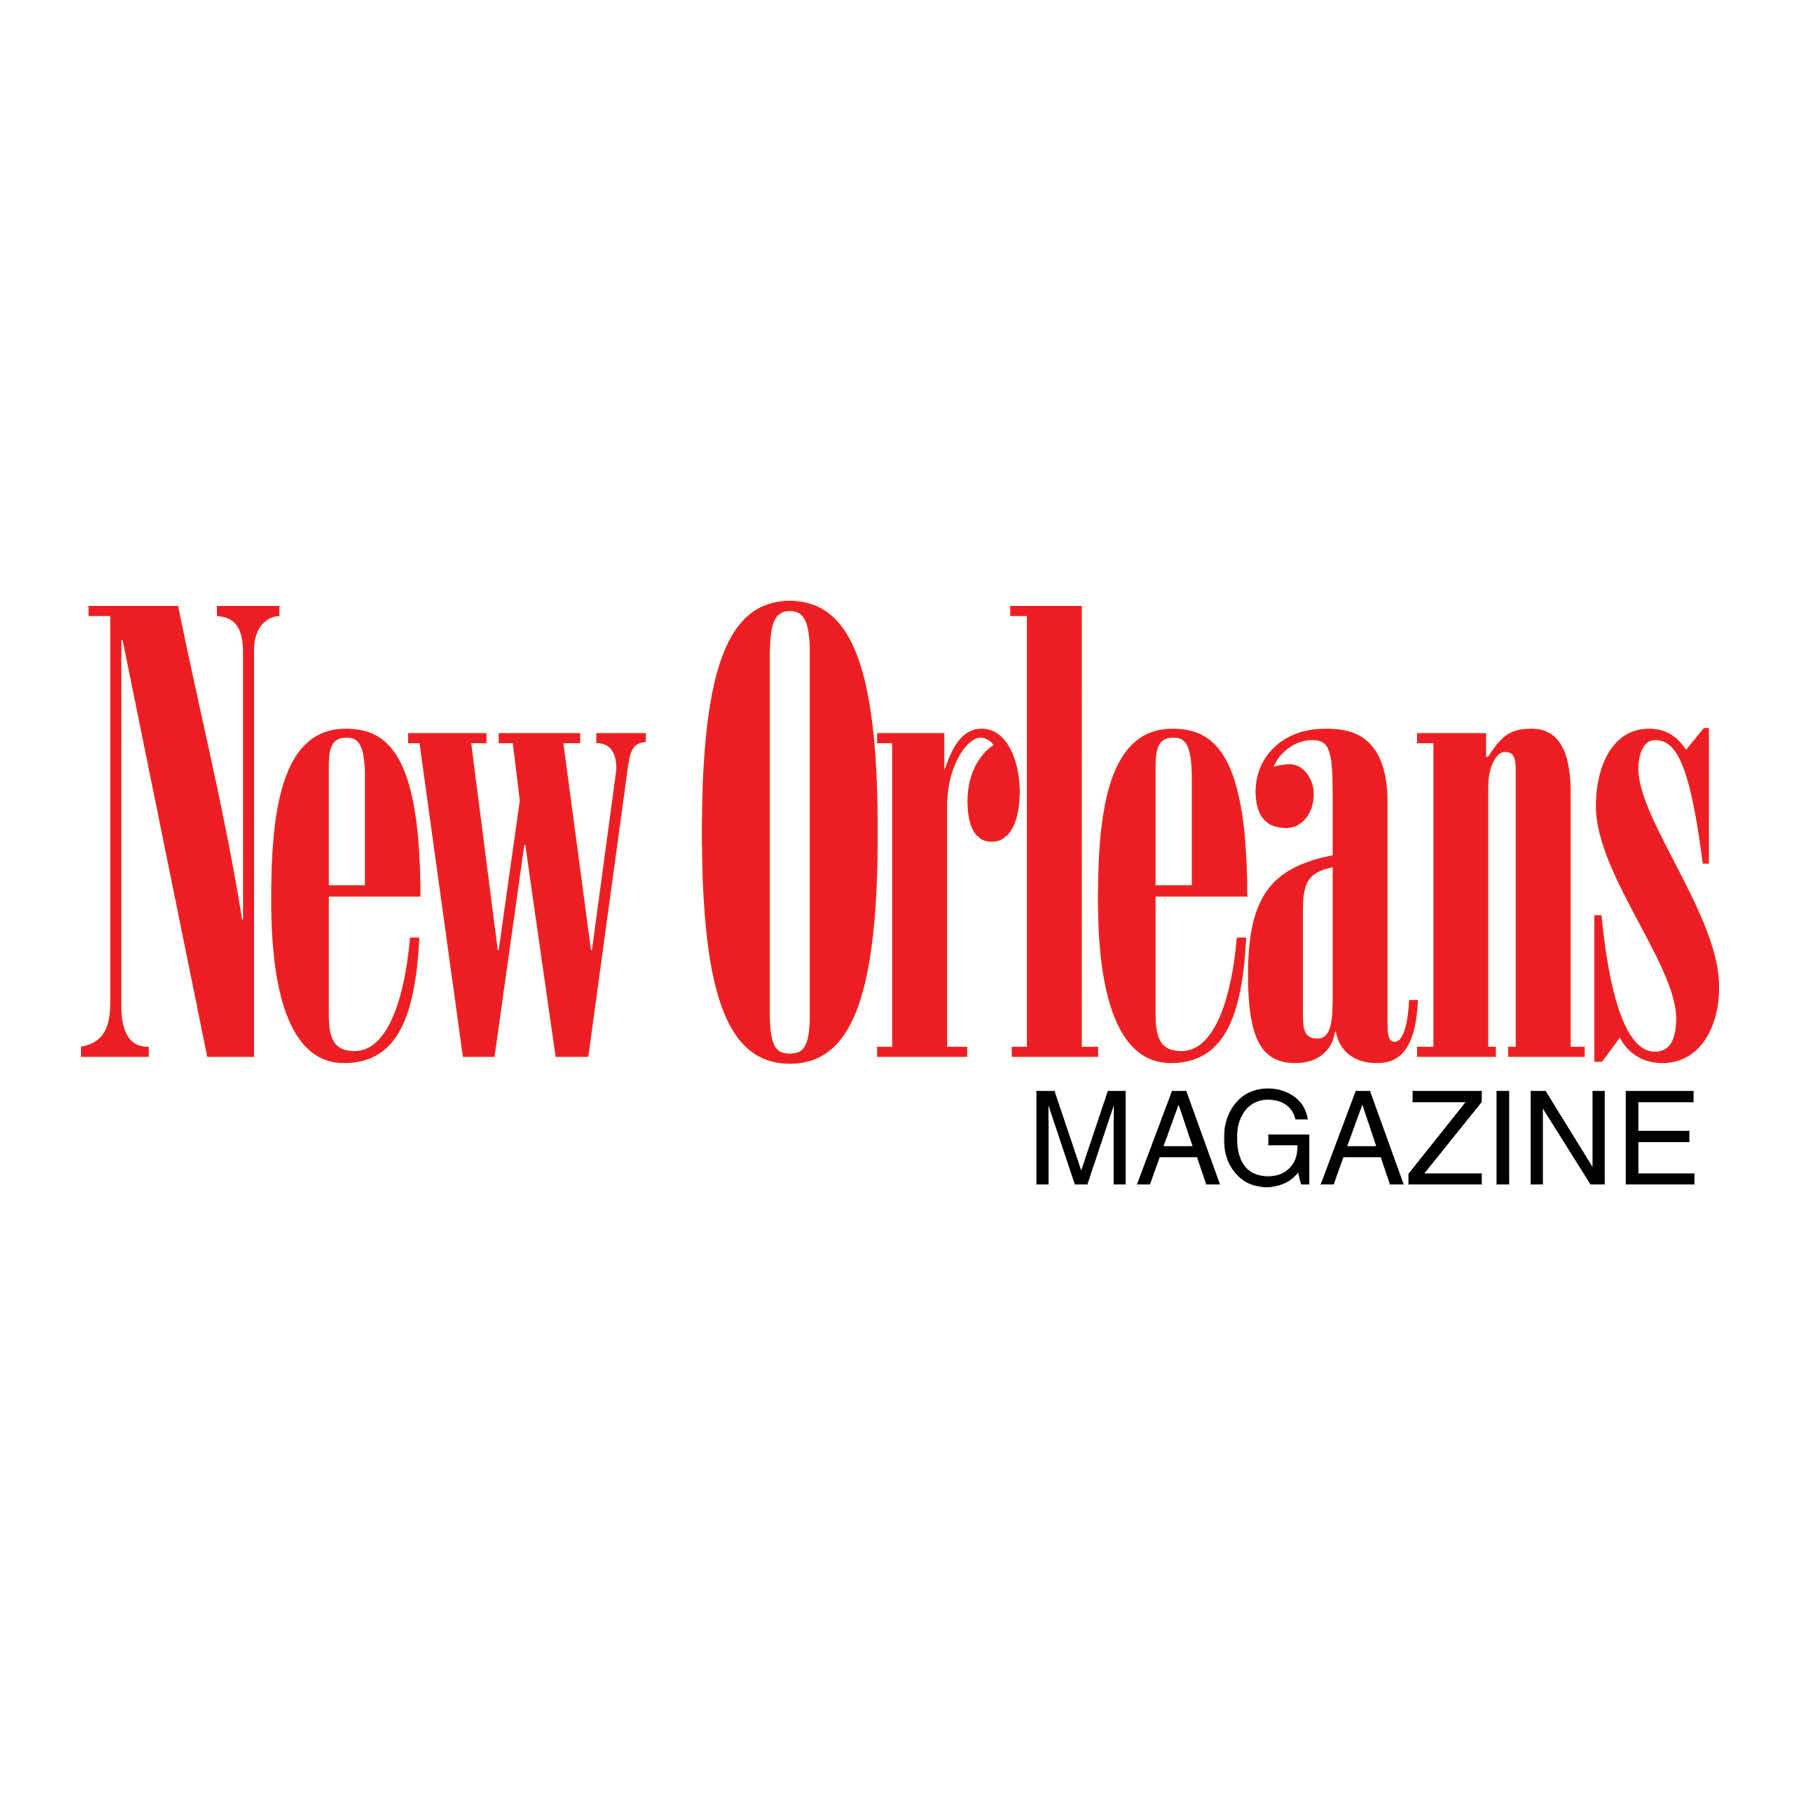 New Orleans Magazine Logo